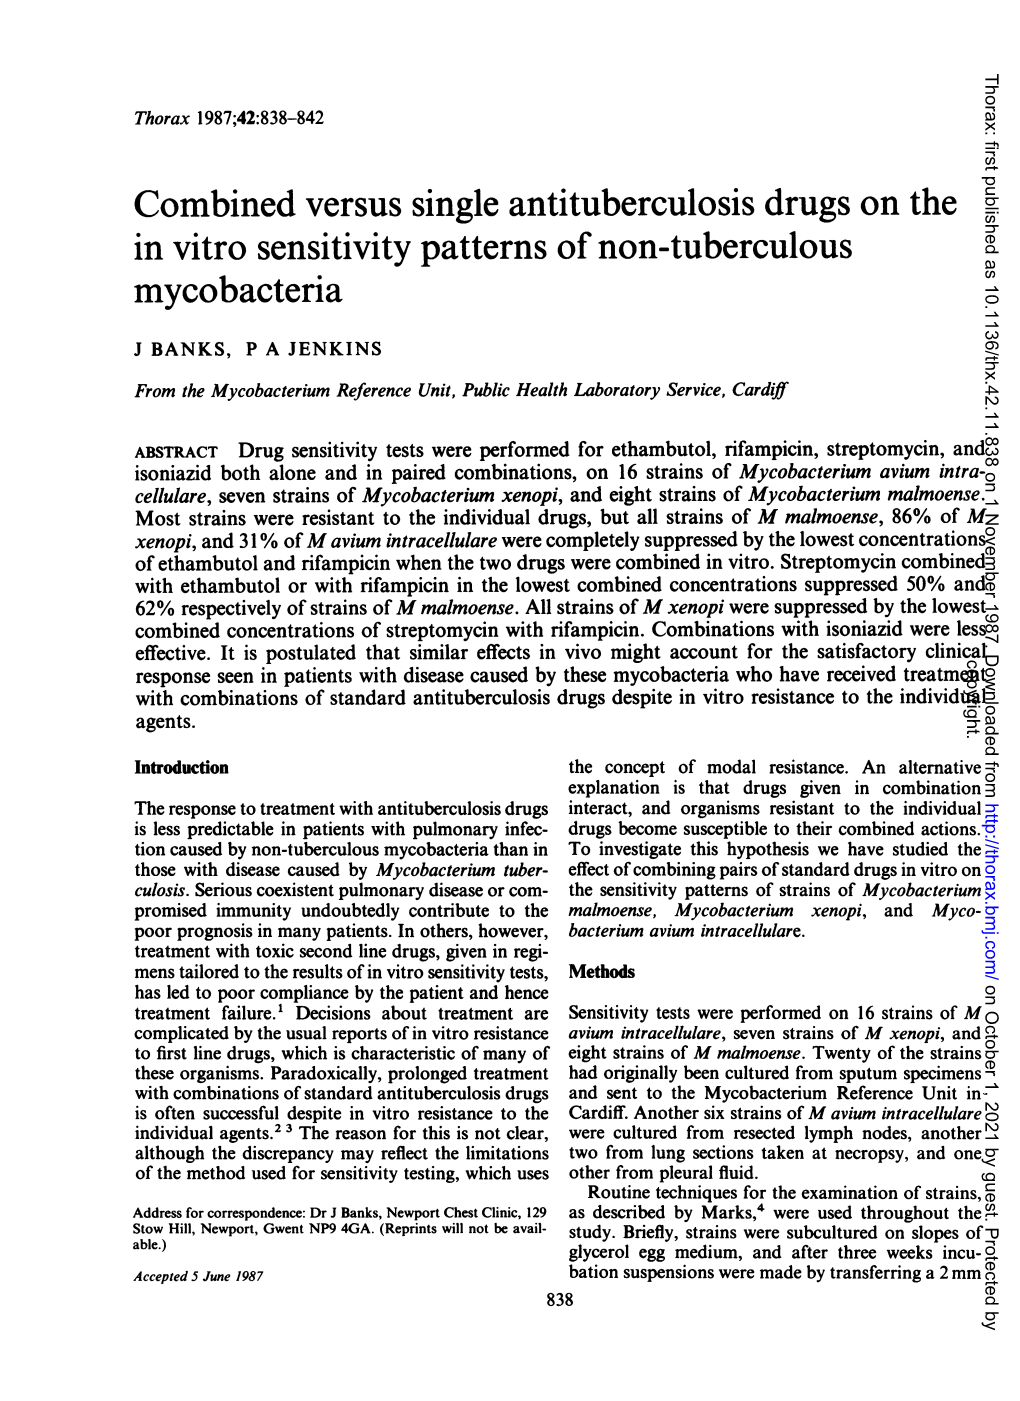 In Vitro Sensitivity Patterns of Non-Tuberculous Mycobacteria